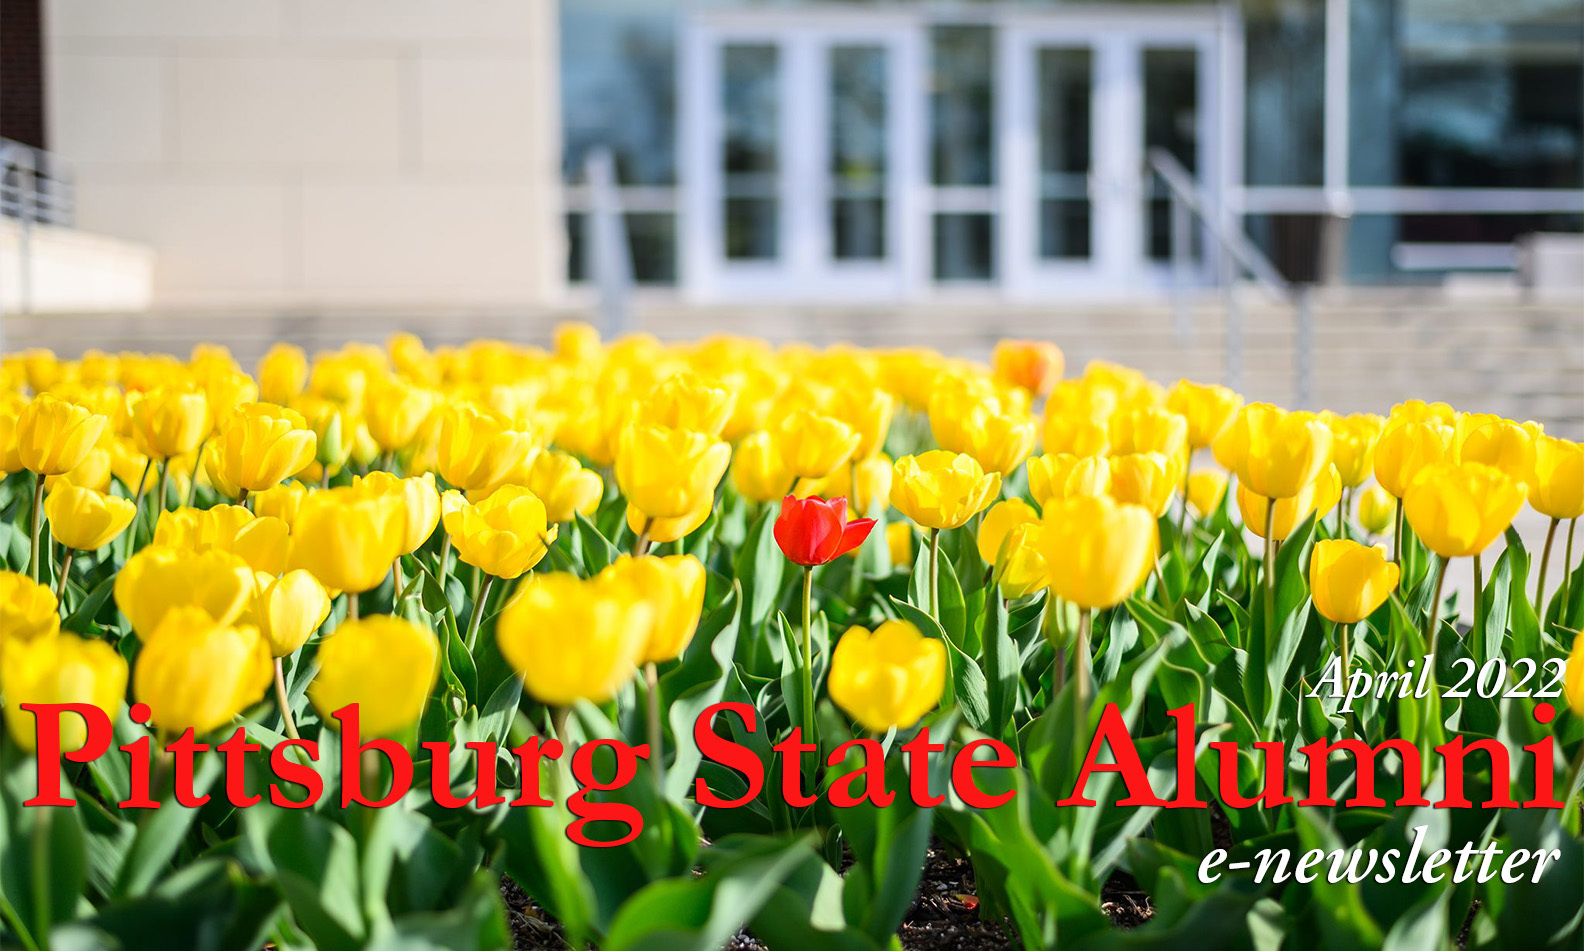 Pittsburg State Alumni April 2022 e-newsletter